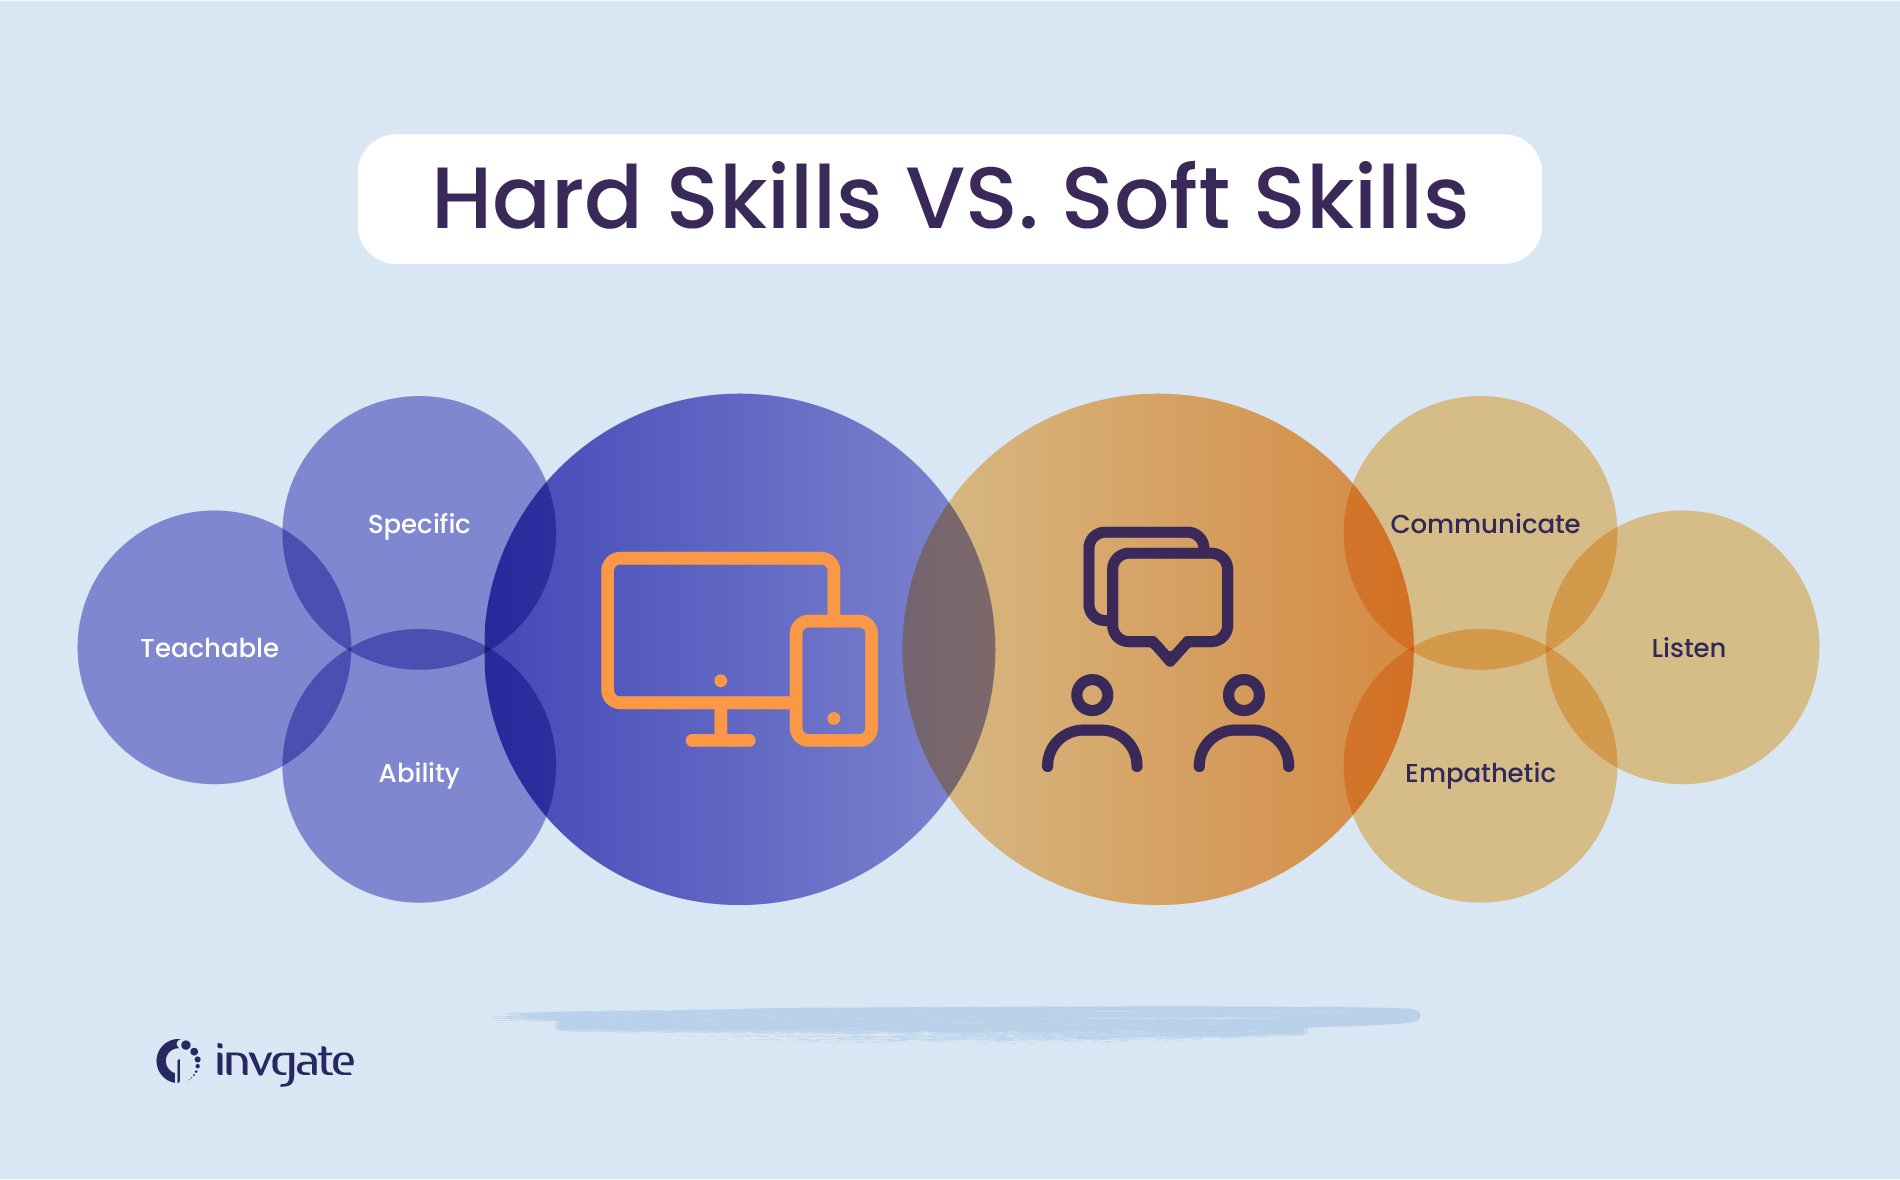 Hard skills vs. soft skills